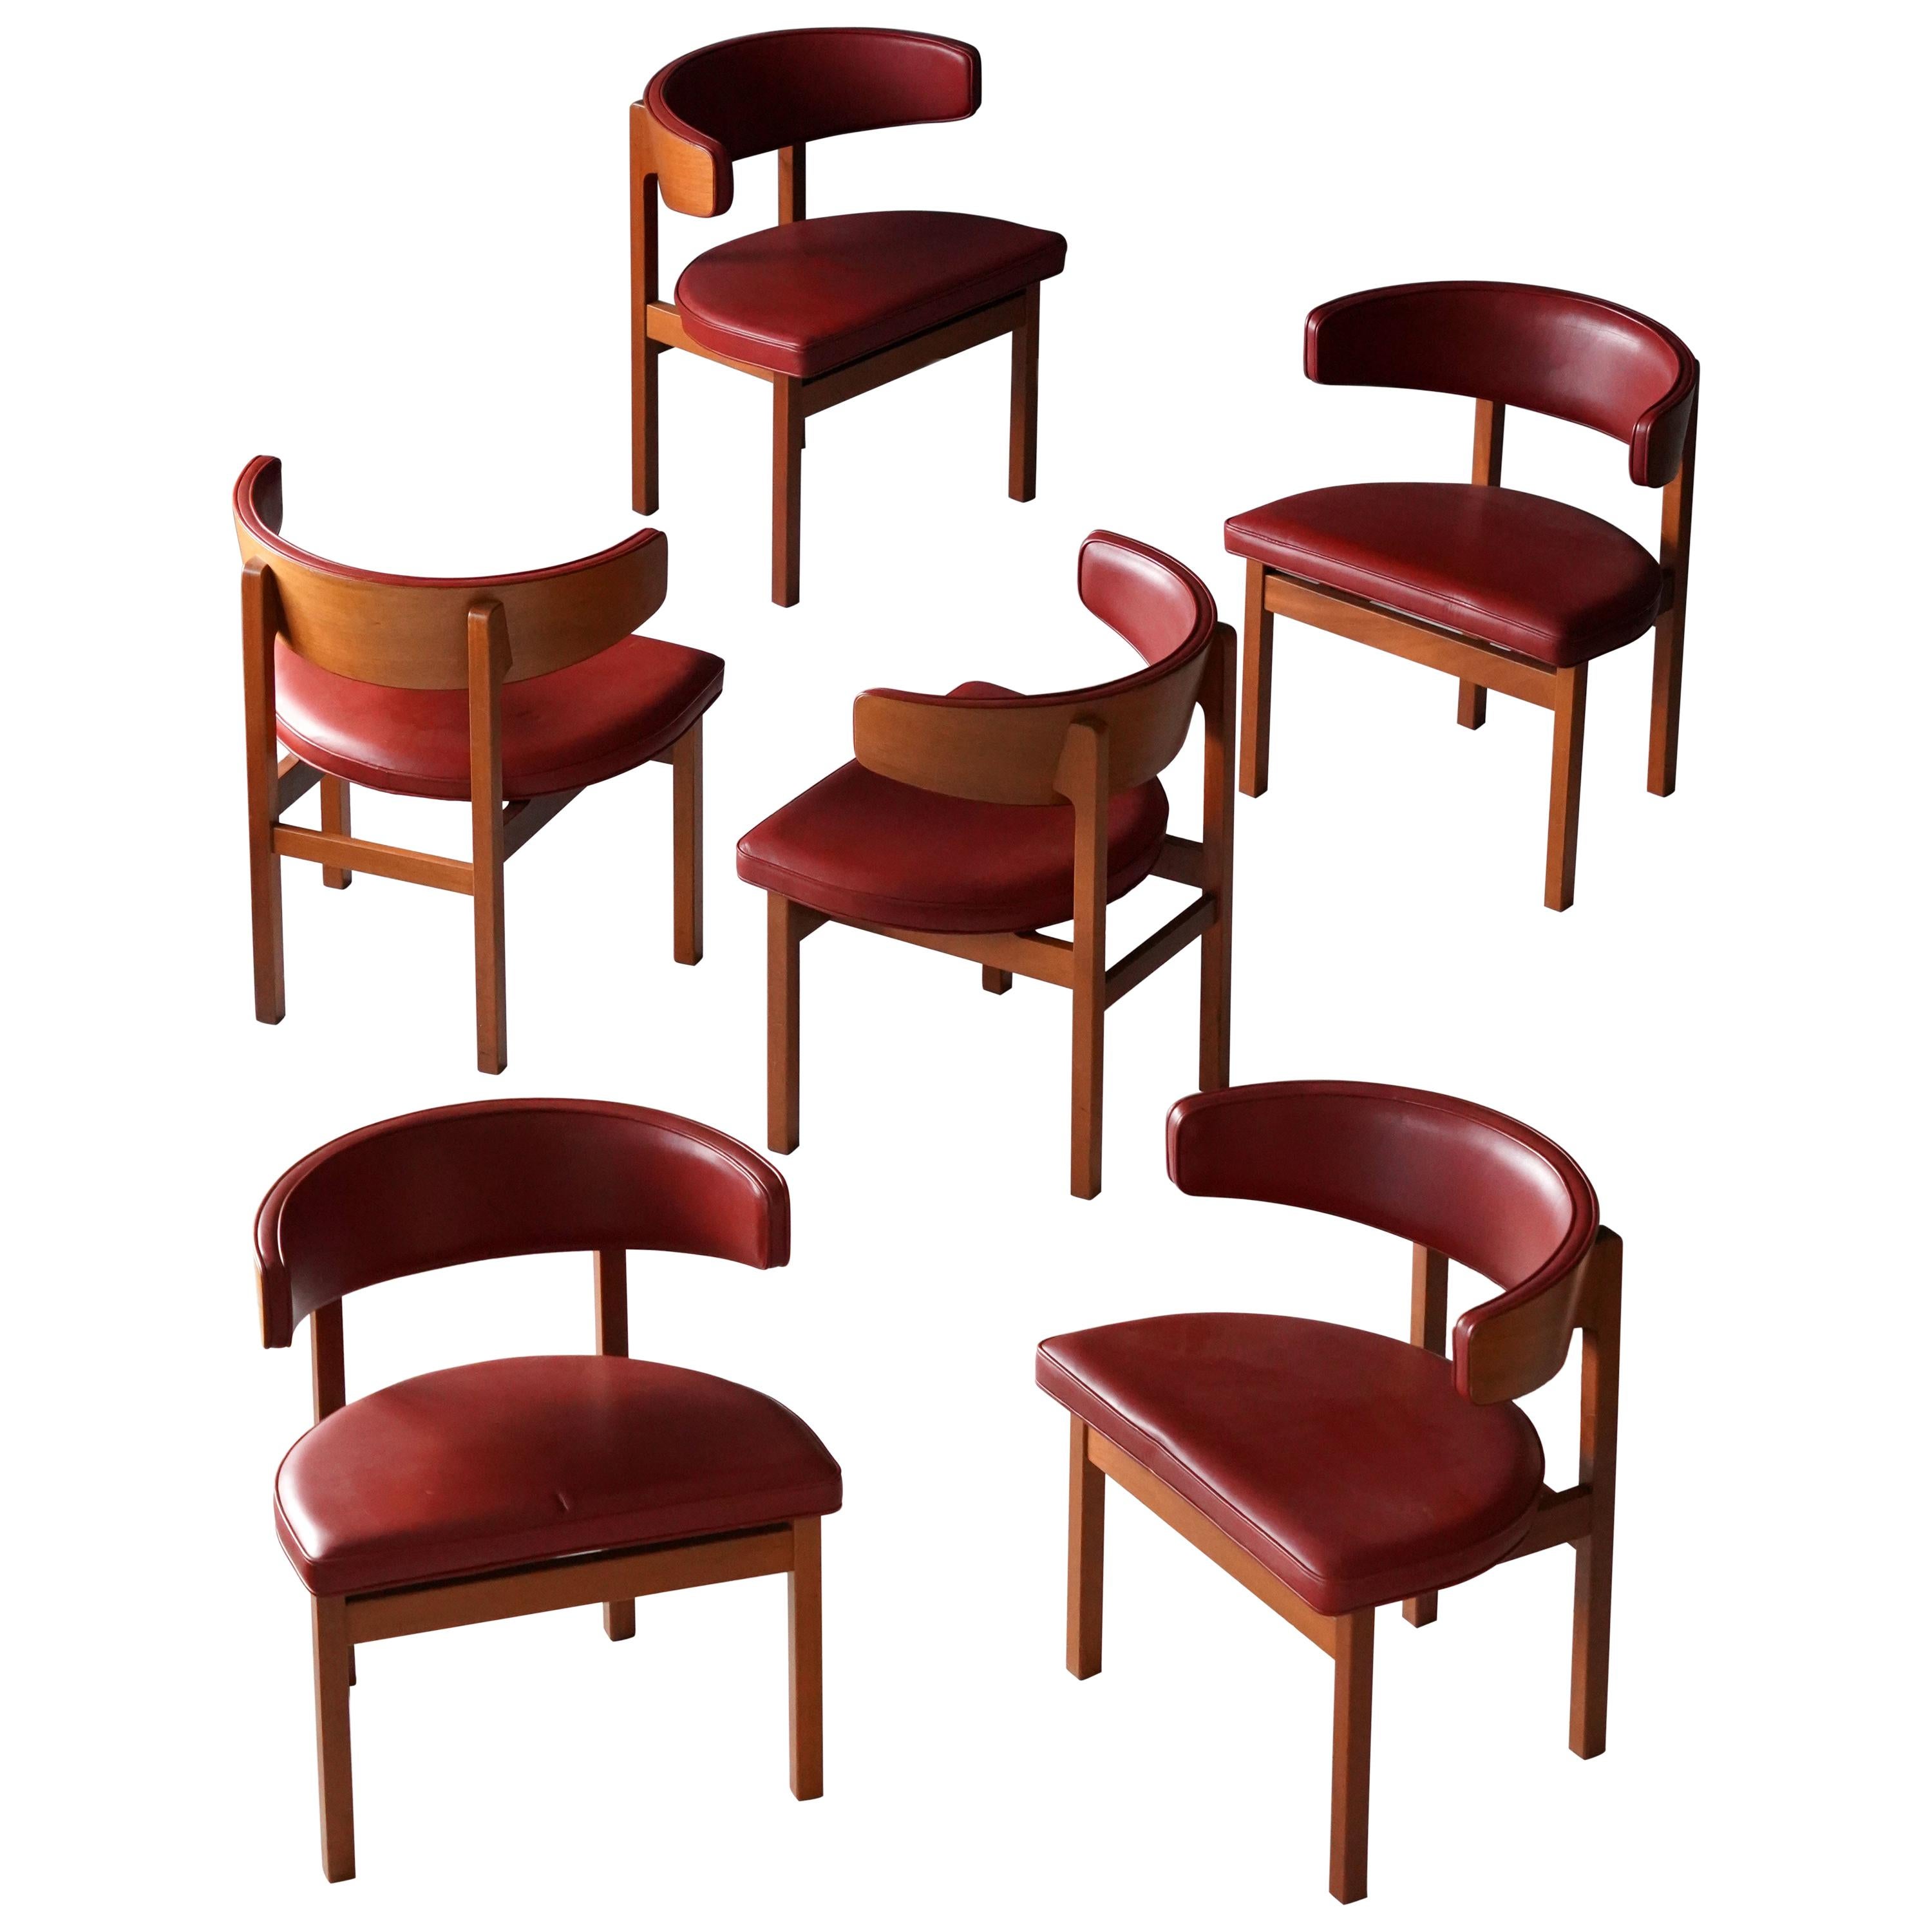 Børge Mogensen, Dining Chairs, Solid Oak, Leather, Frederica Furniture, Denmark